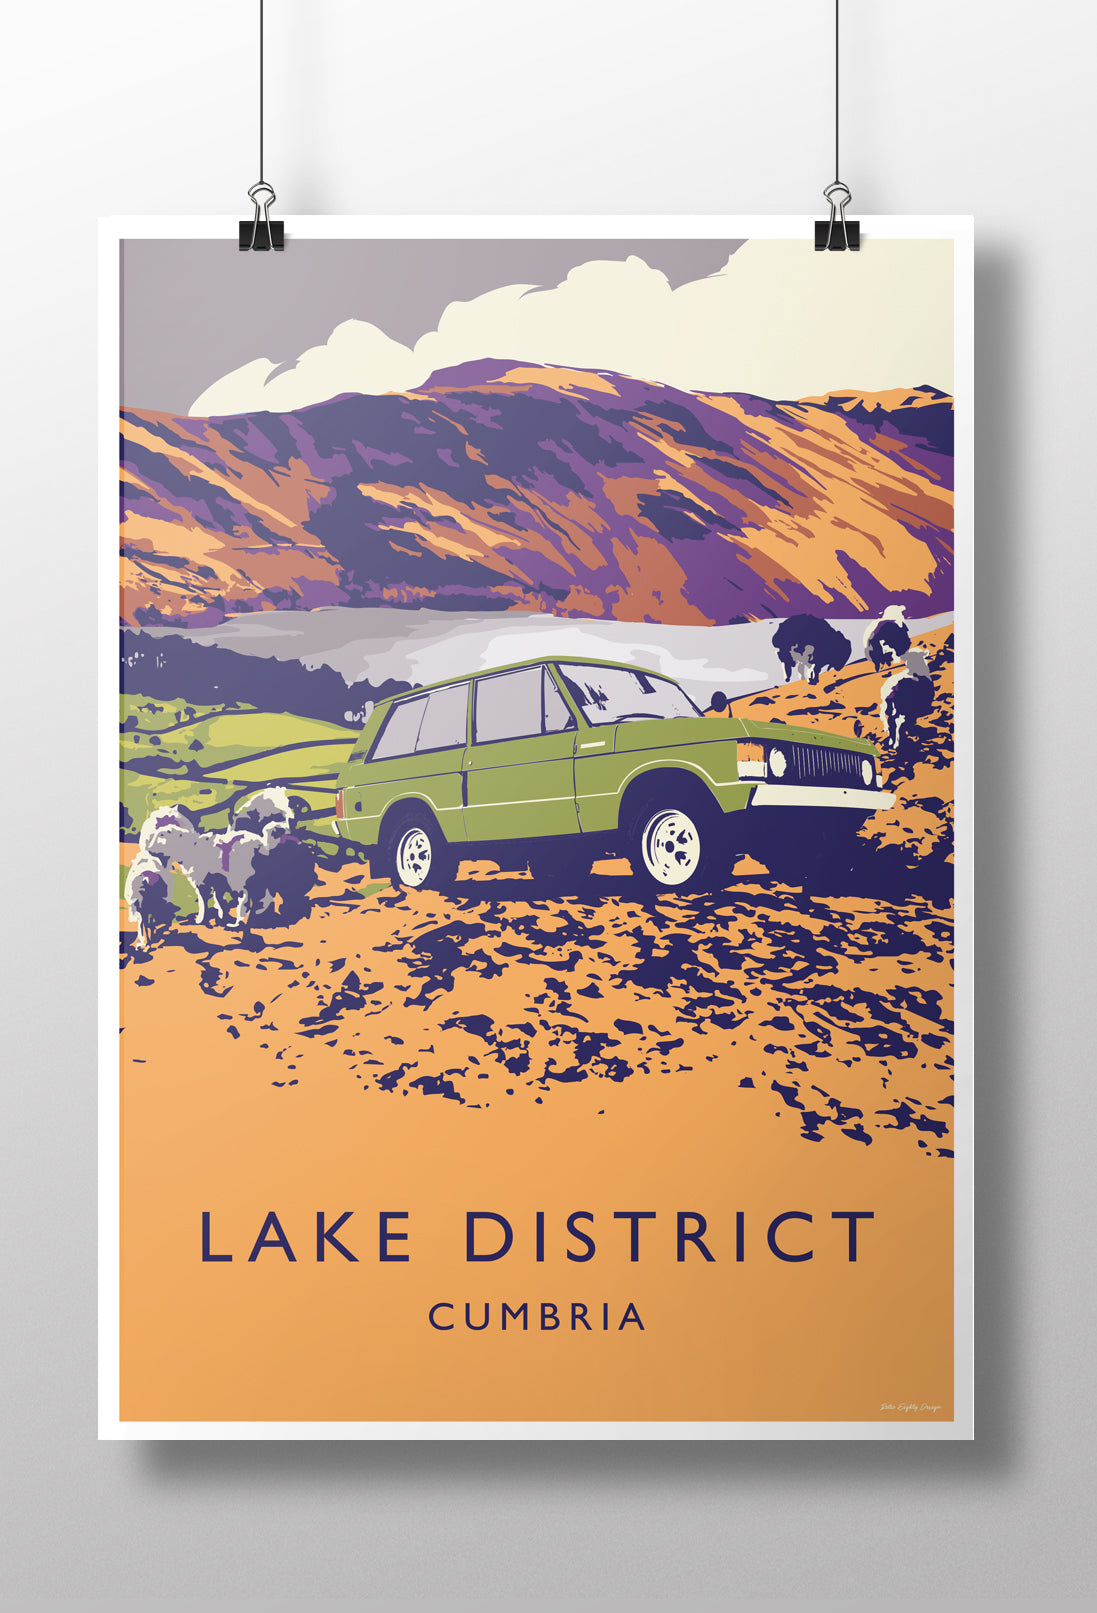 'Lake District' Early 2 door Prints